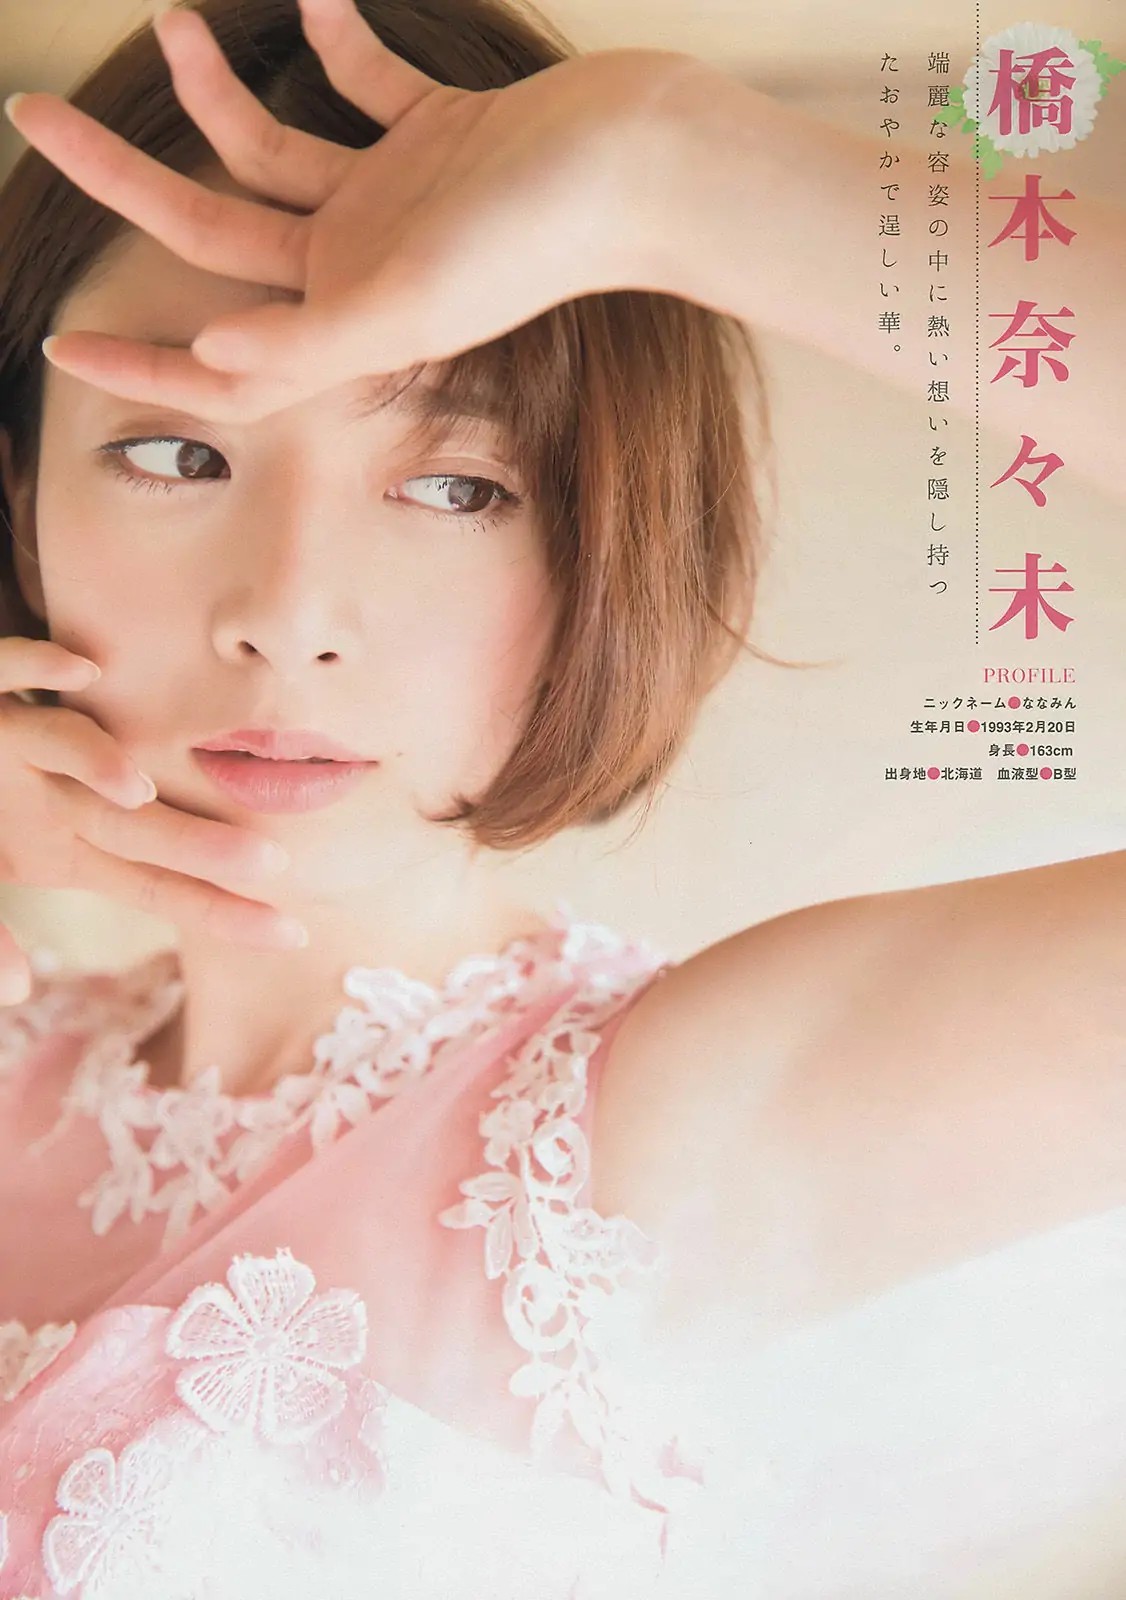 [Young Magazine] 2015年No.16 西野七瀬 橋本奈々未